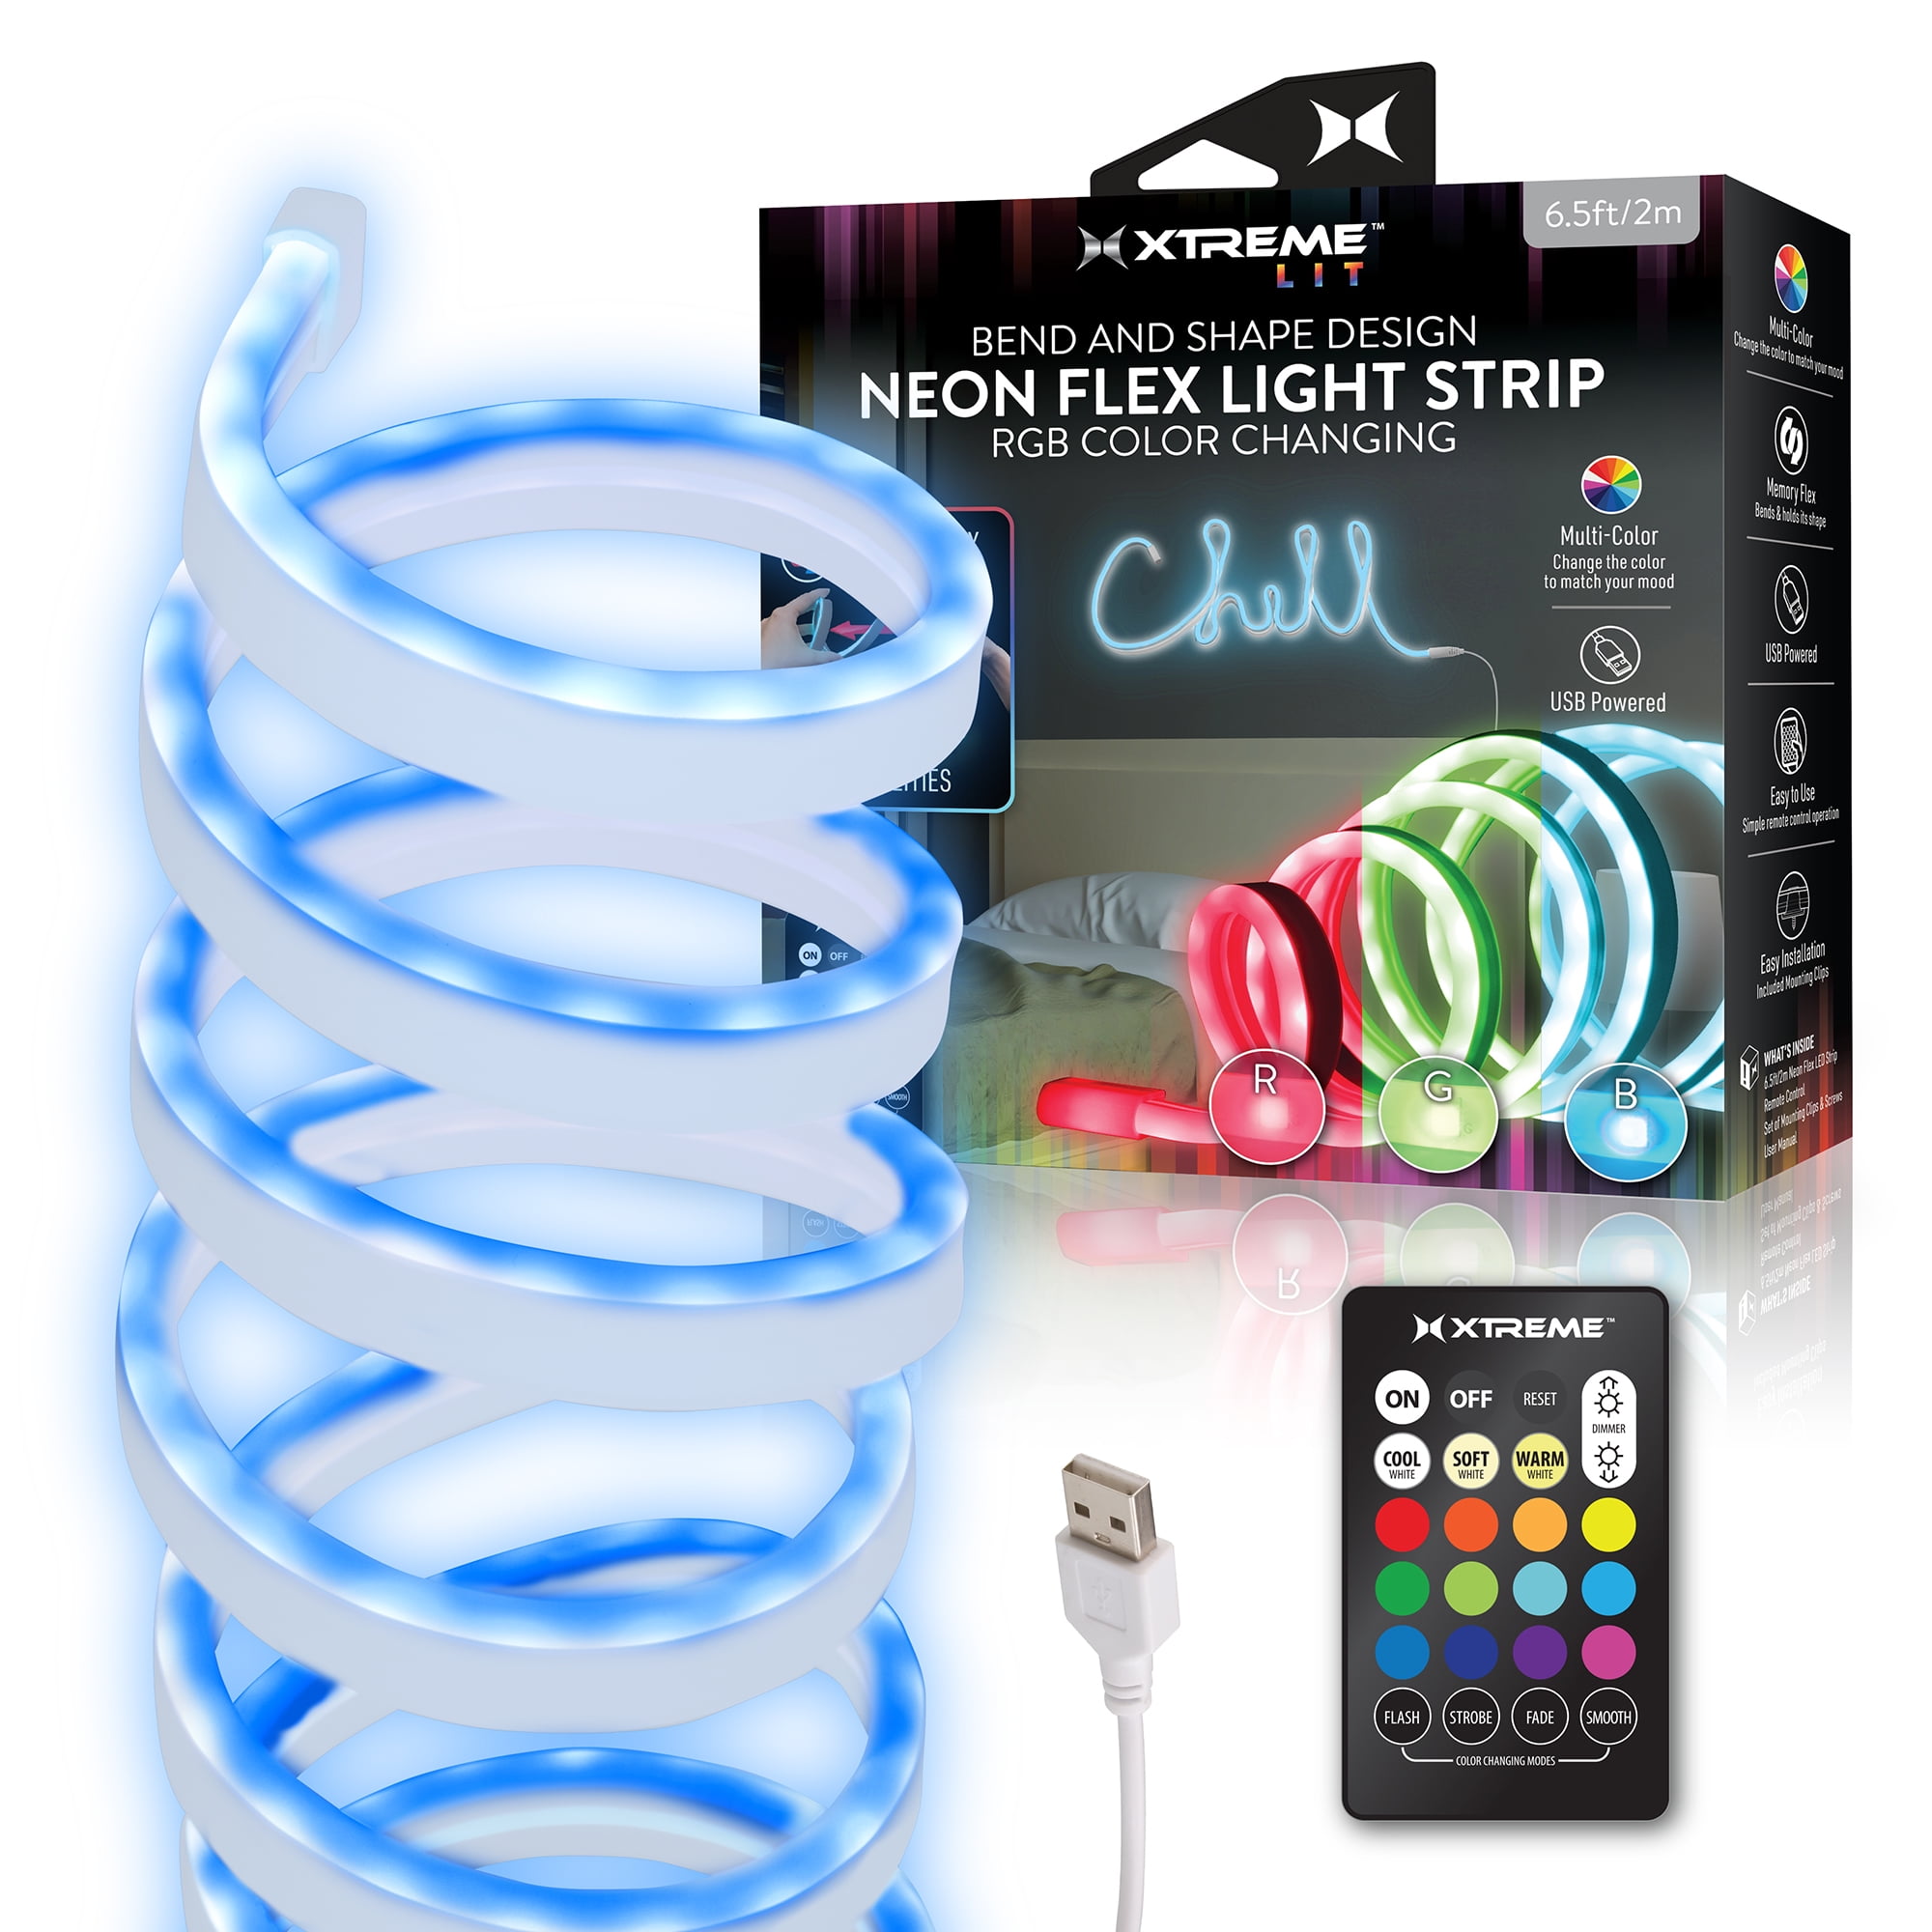 Lucid™ RGB Flexible LED Neon Side Bend Strip Light